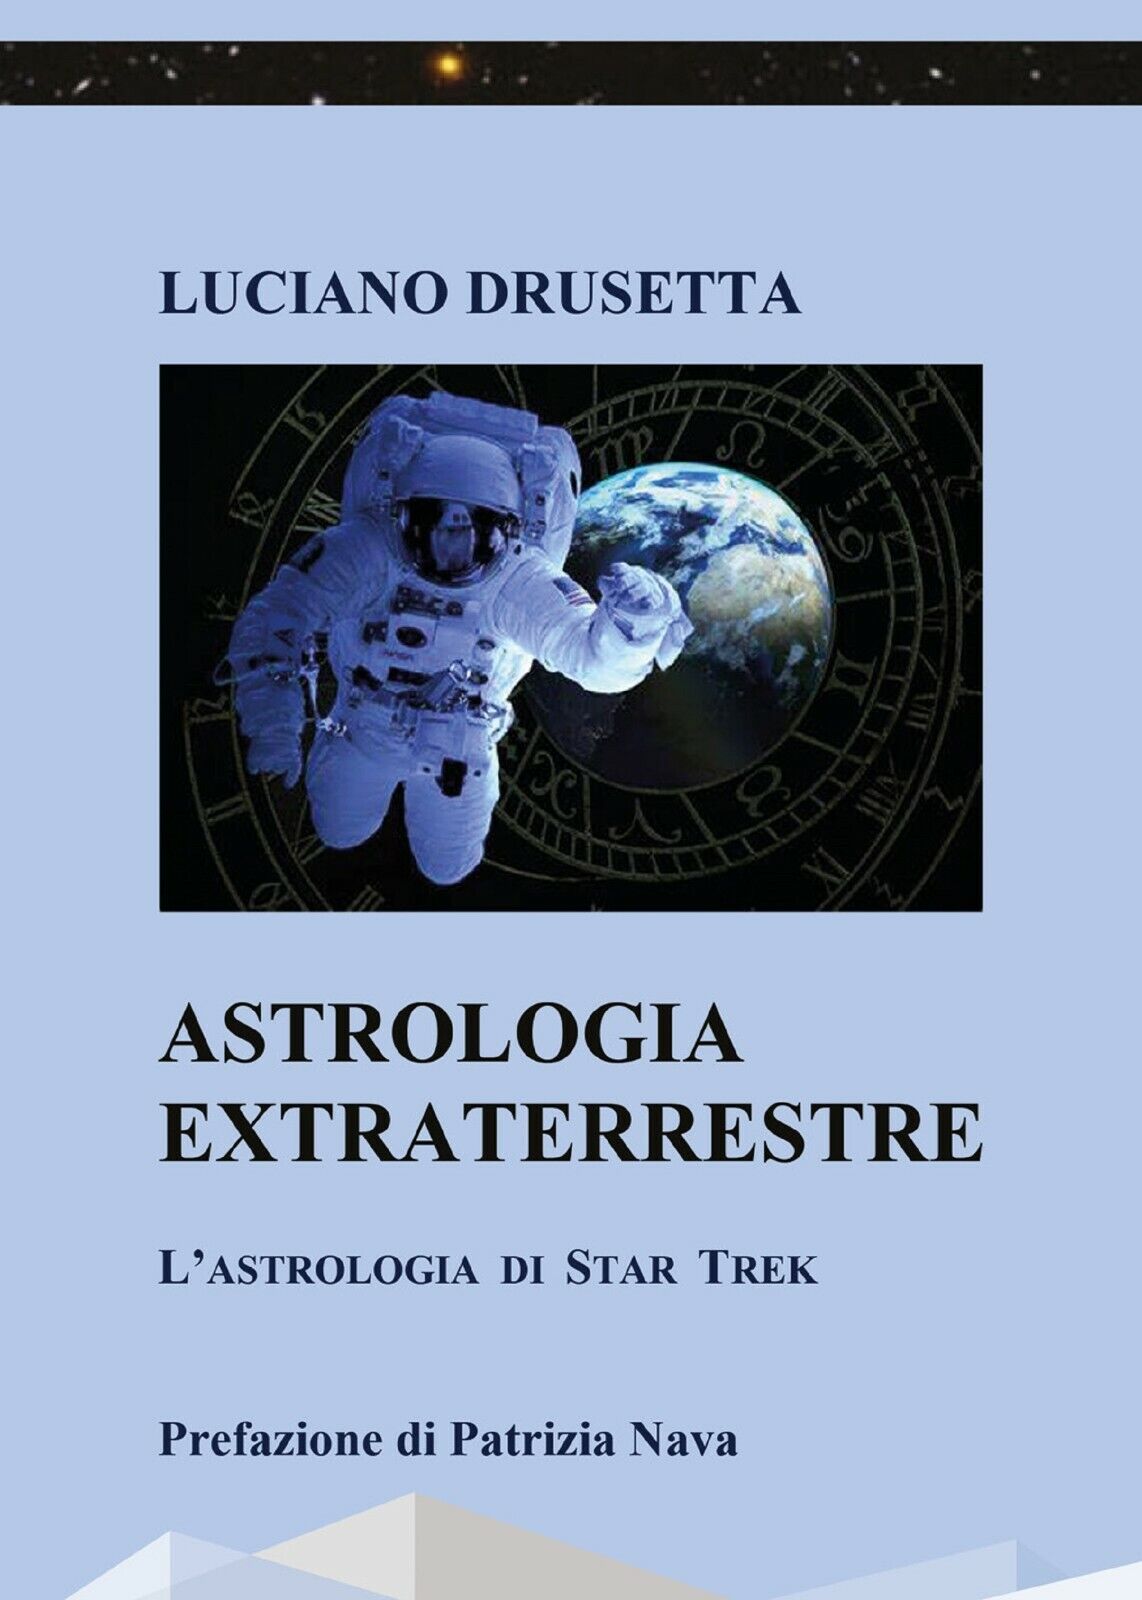 Astrologia extraterrestre. L'astrologia di Star Trek di Luciano Drusetta,  2021,